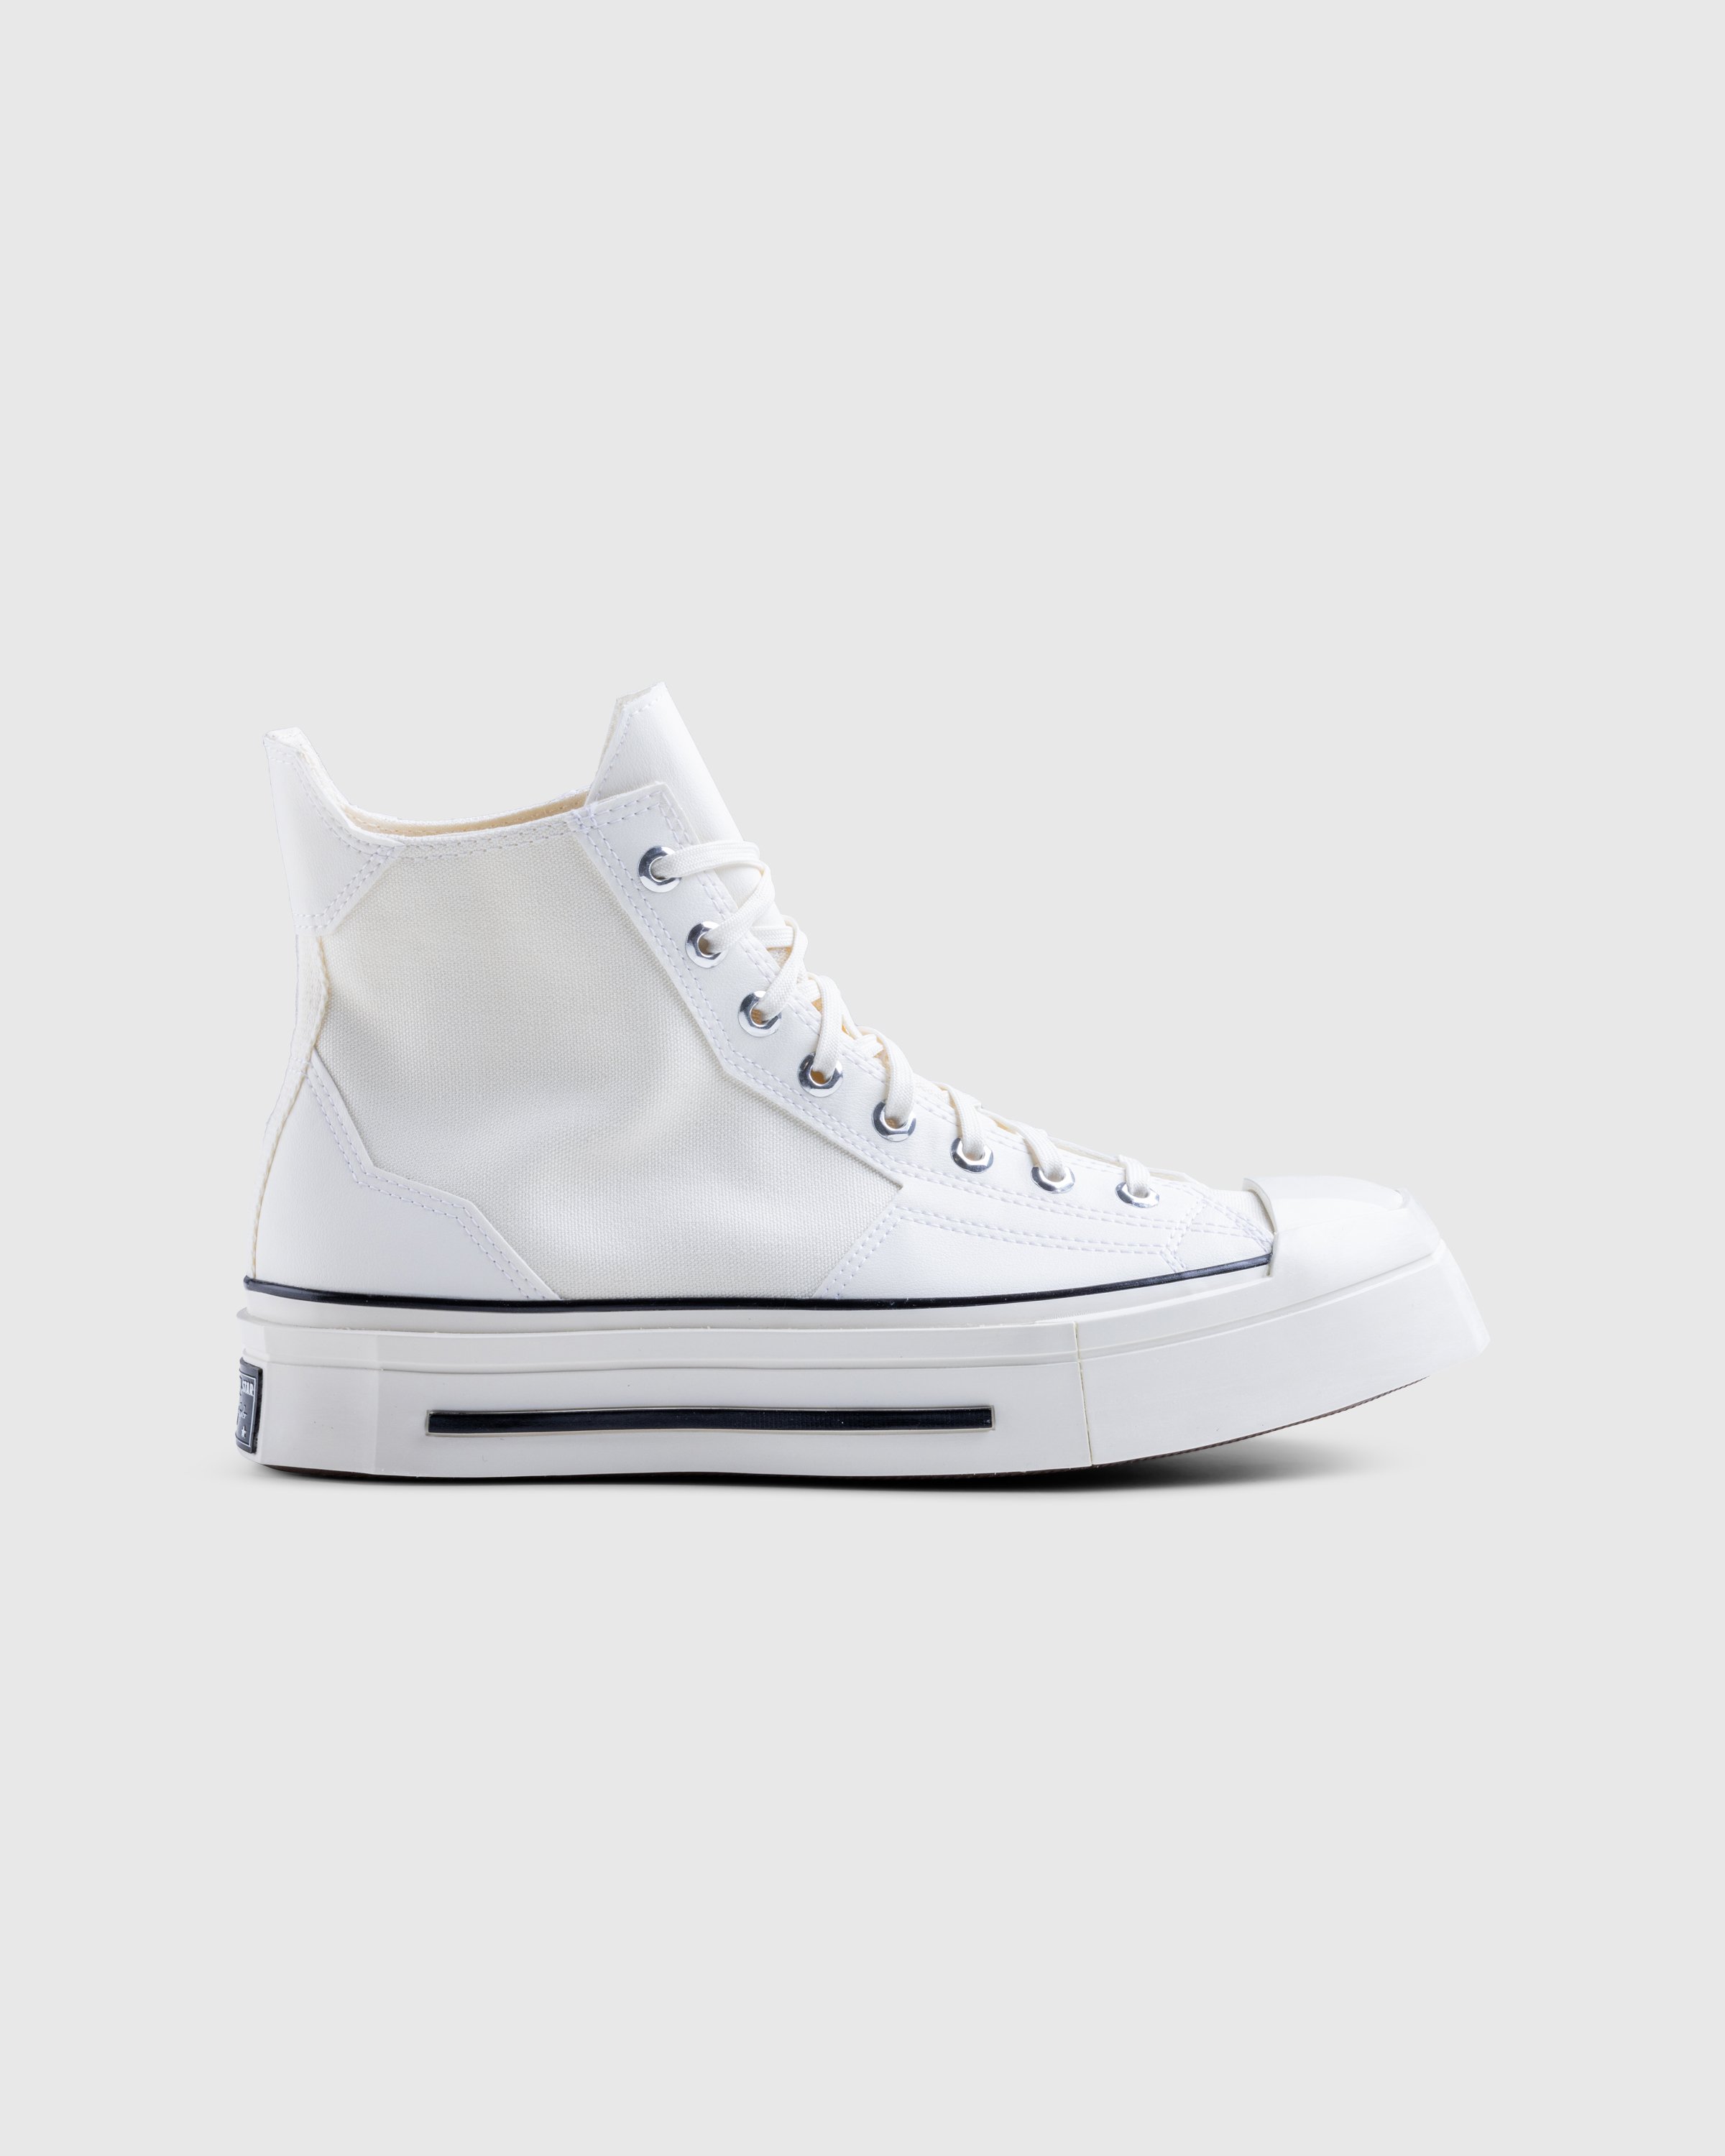 Converse - CHUCK 70 DE LUXE SQUARED HI EGRET/BLACK - Footwear - White - Image 1